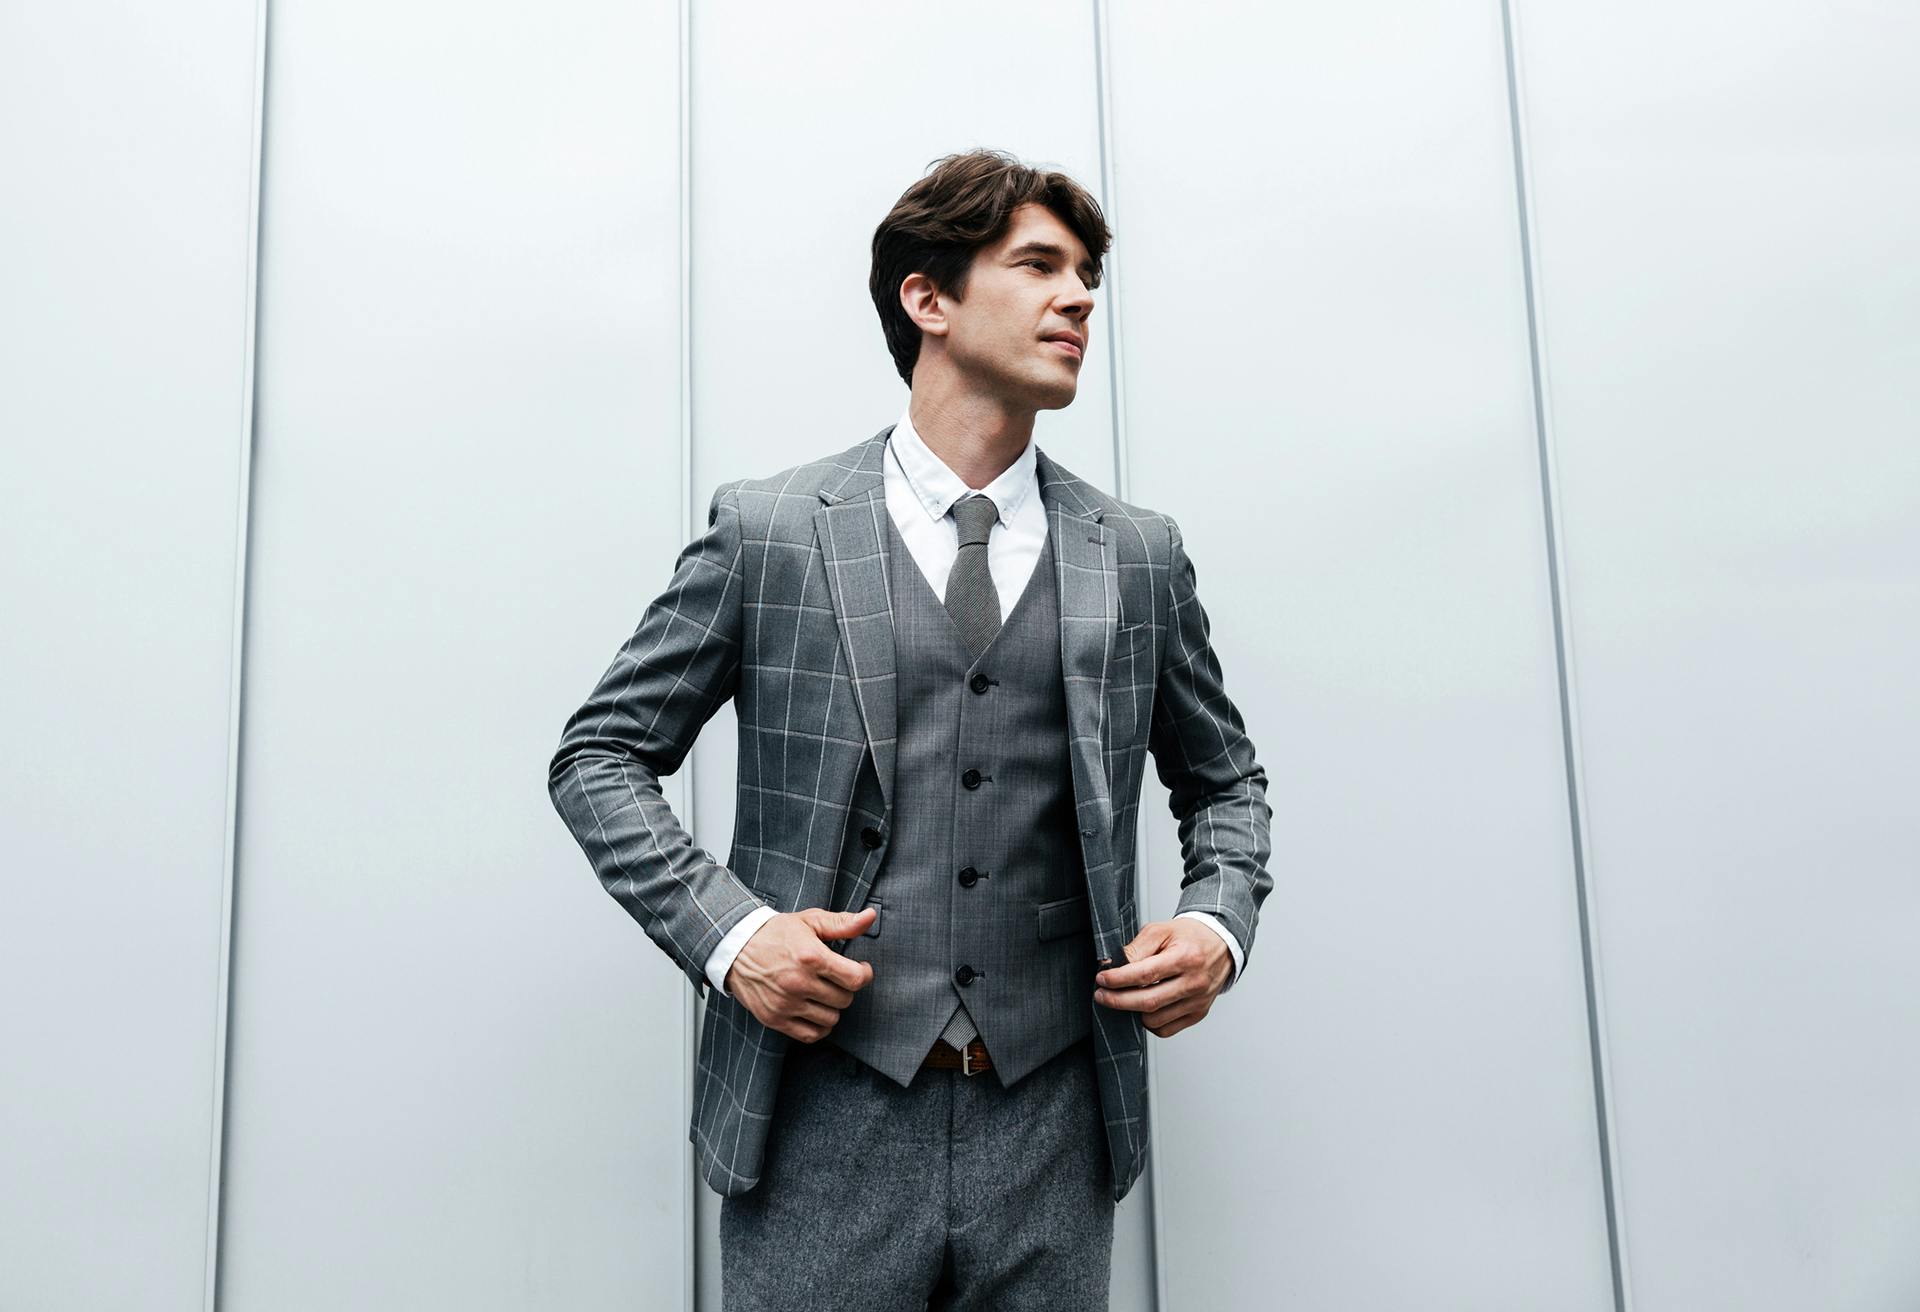 Man in a grey suit